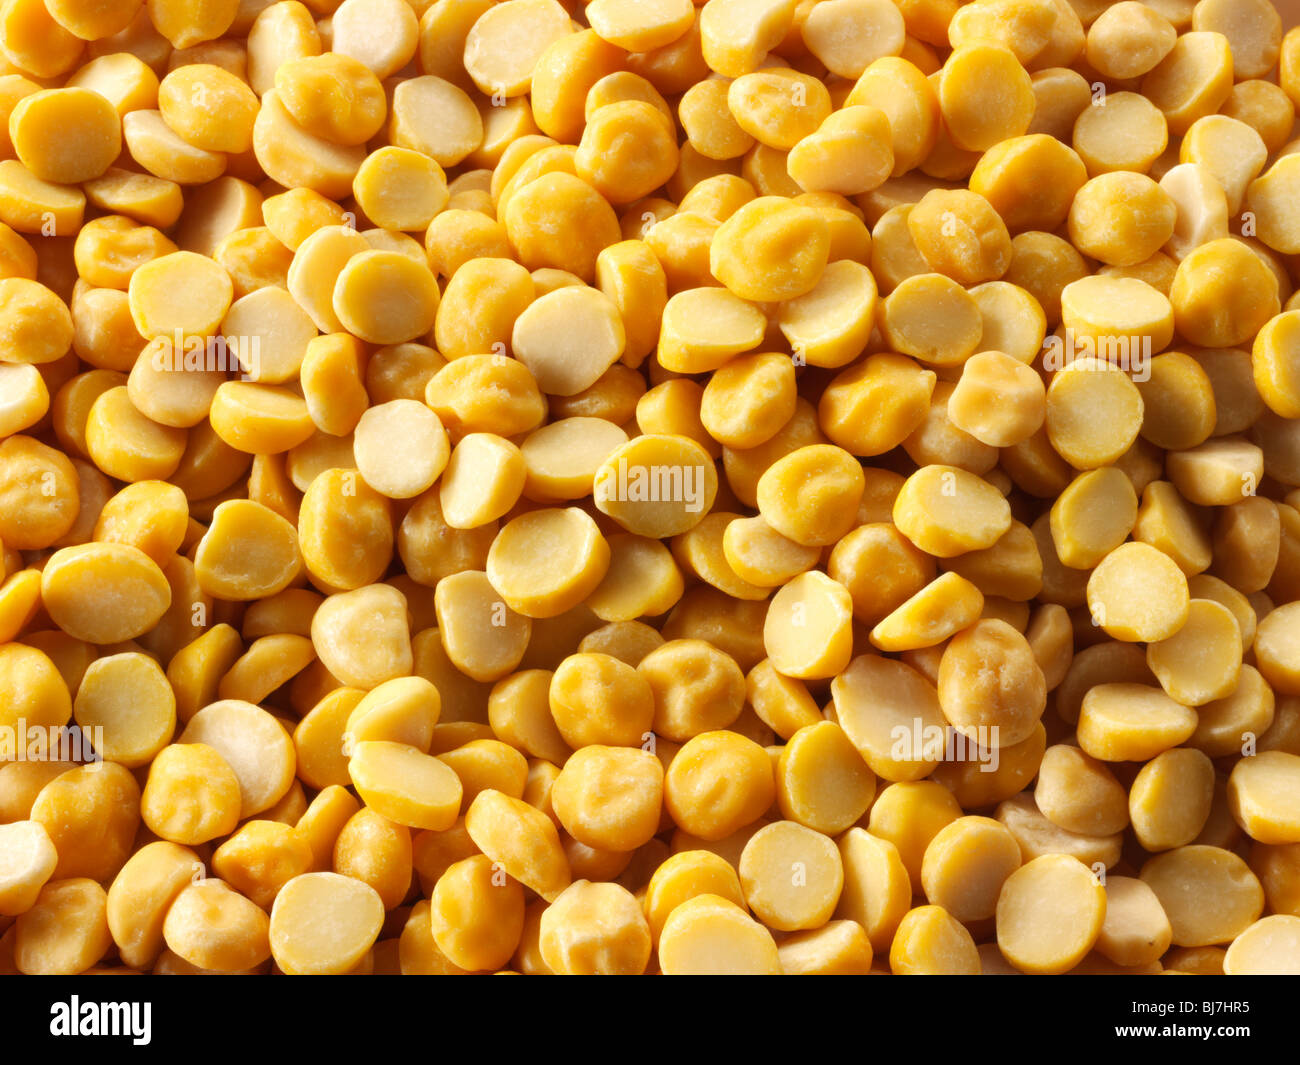 Whole dried chana dah yellow lentil beans - close up full frame top shot Stock Photo